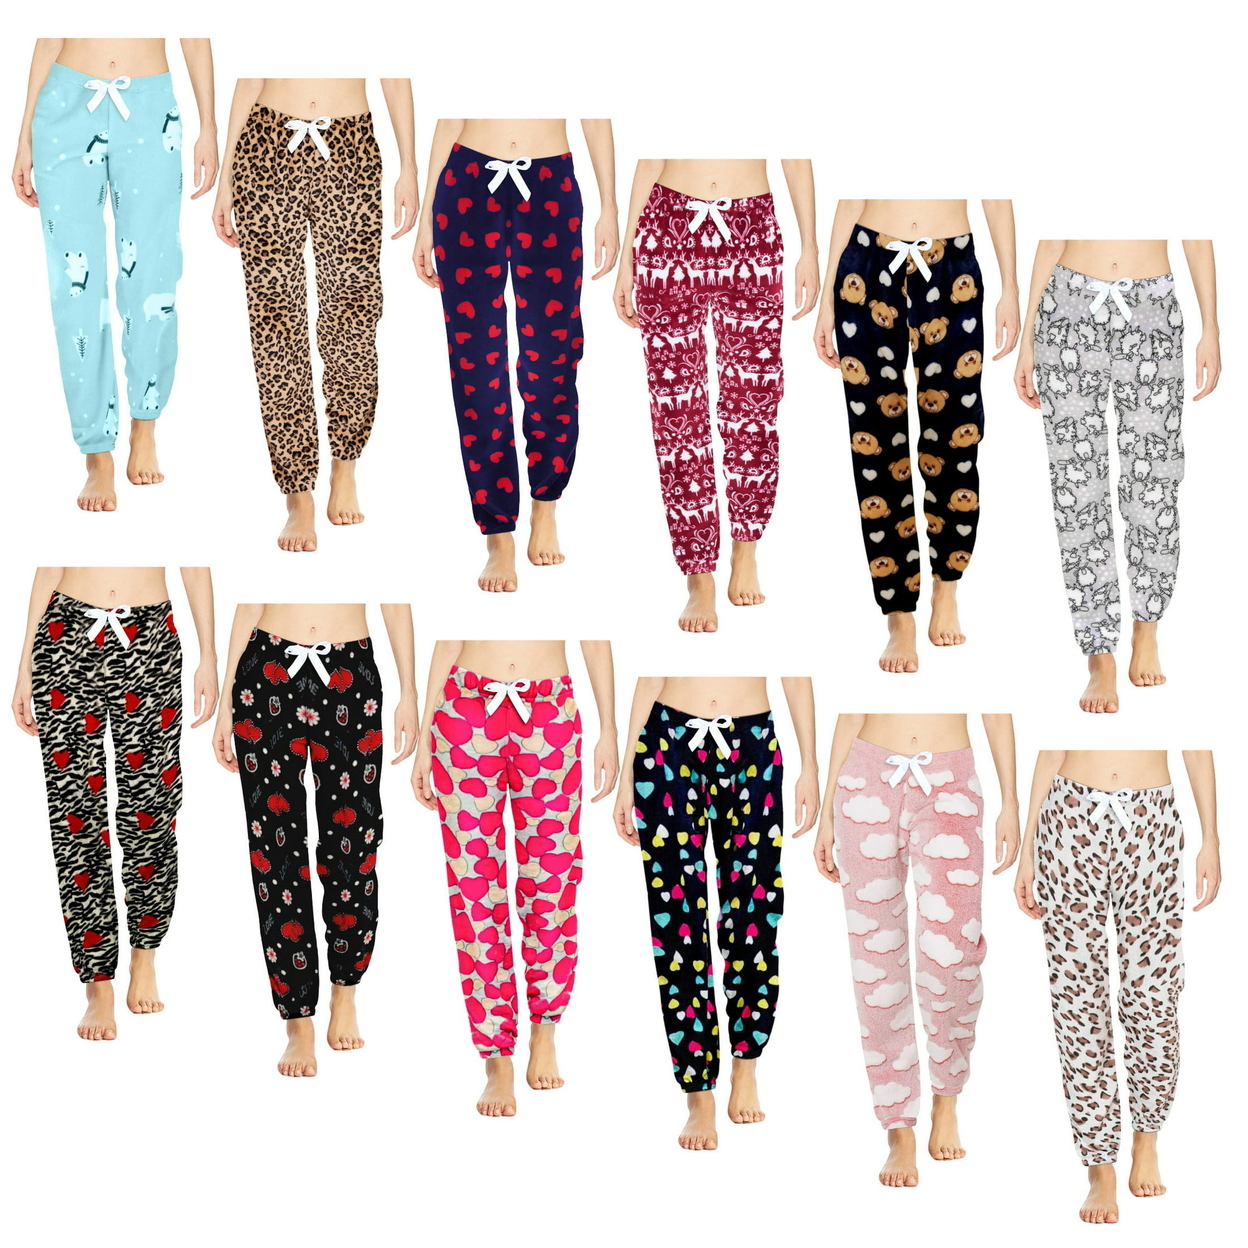 3-Pack: Women's Printed Ultra-Soft Comfy Stretch Micro-Fleece Pajama Lounge Pants - X-large, Love